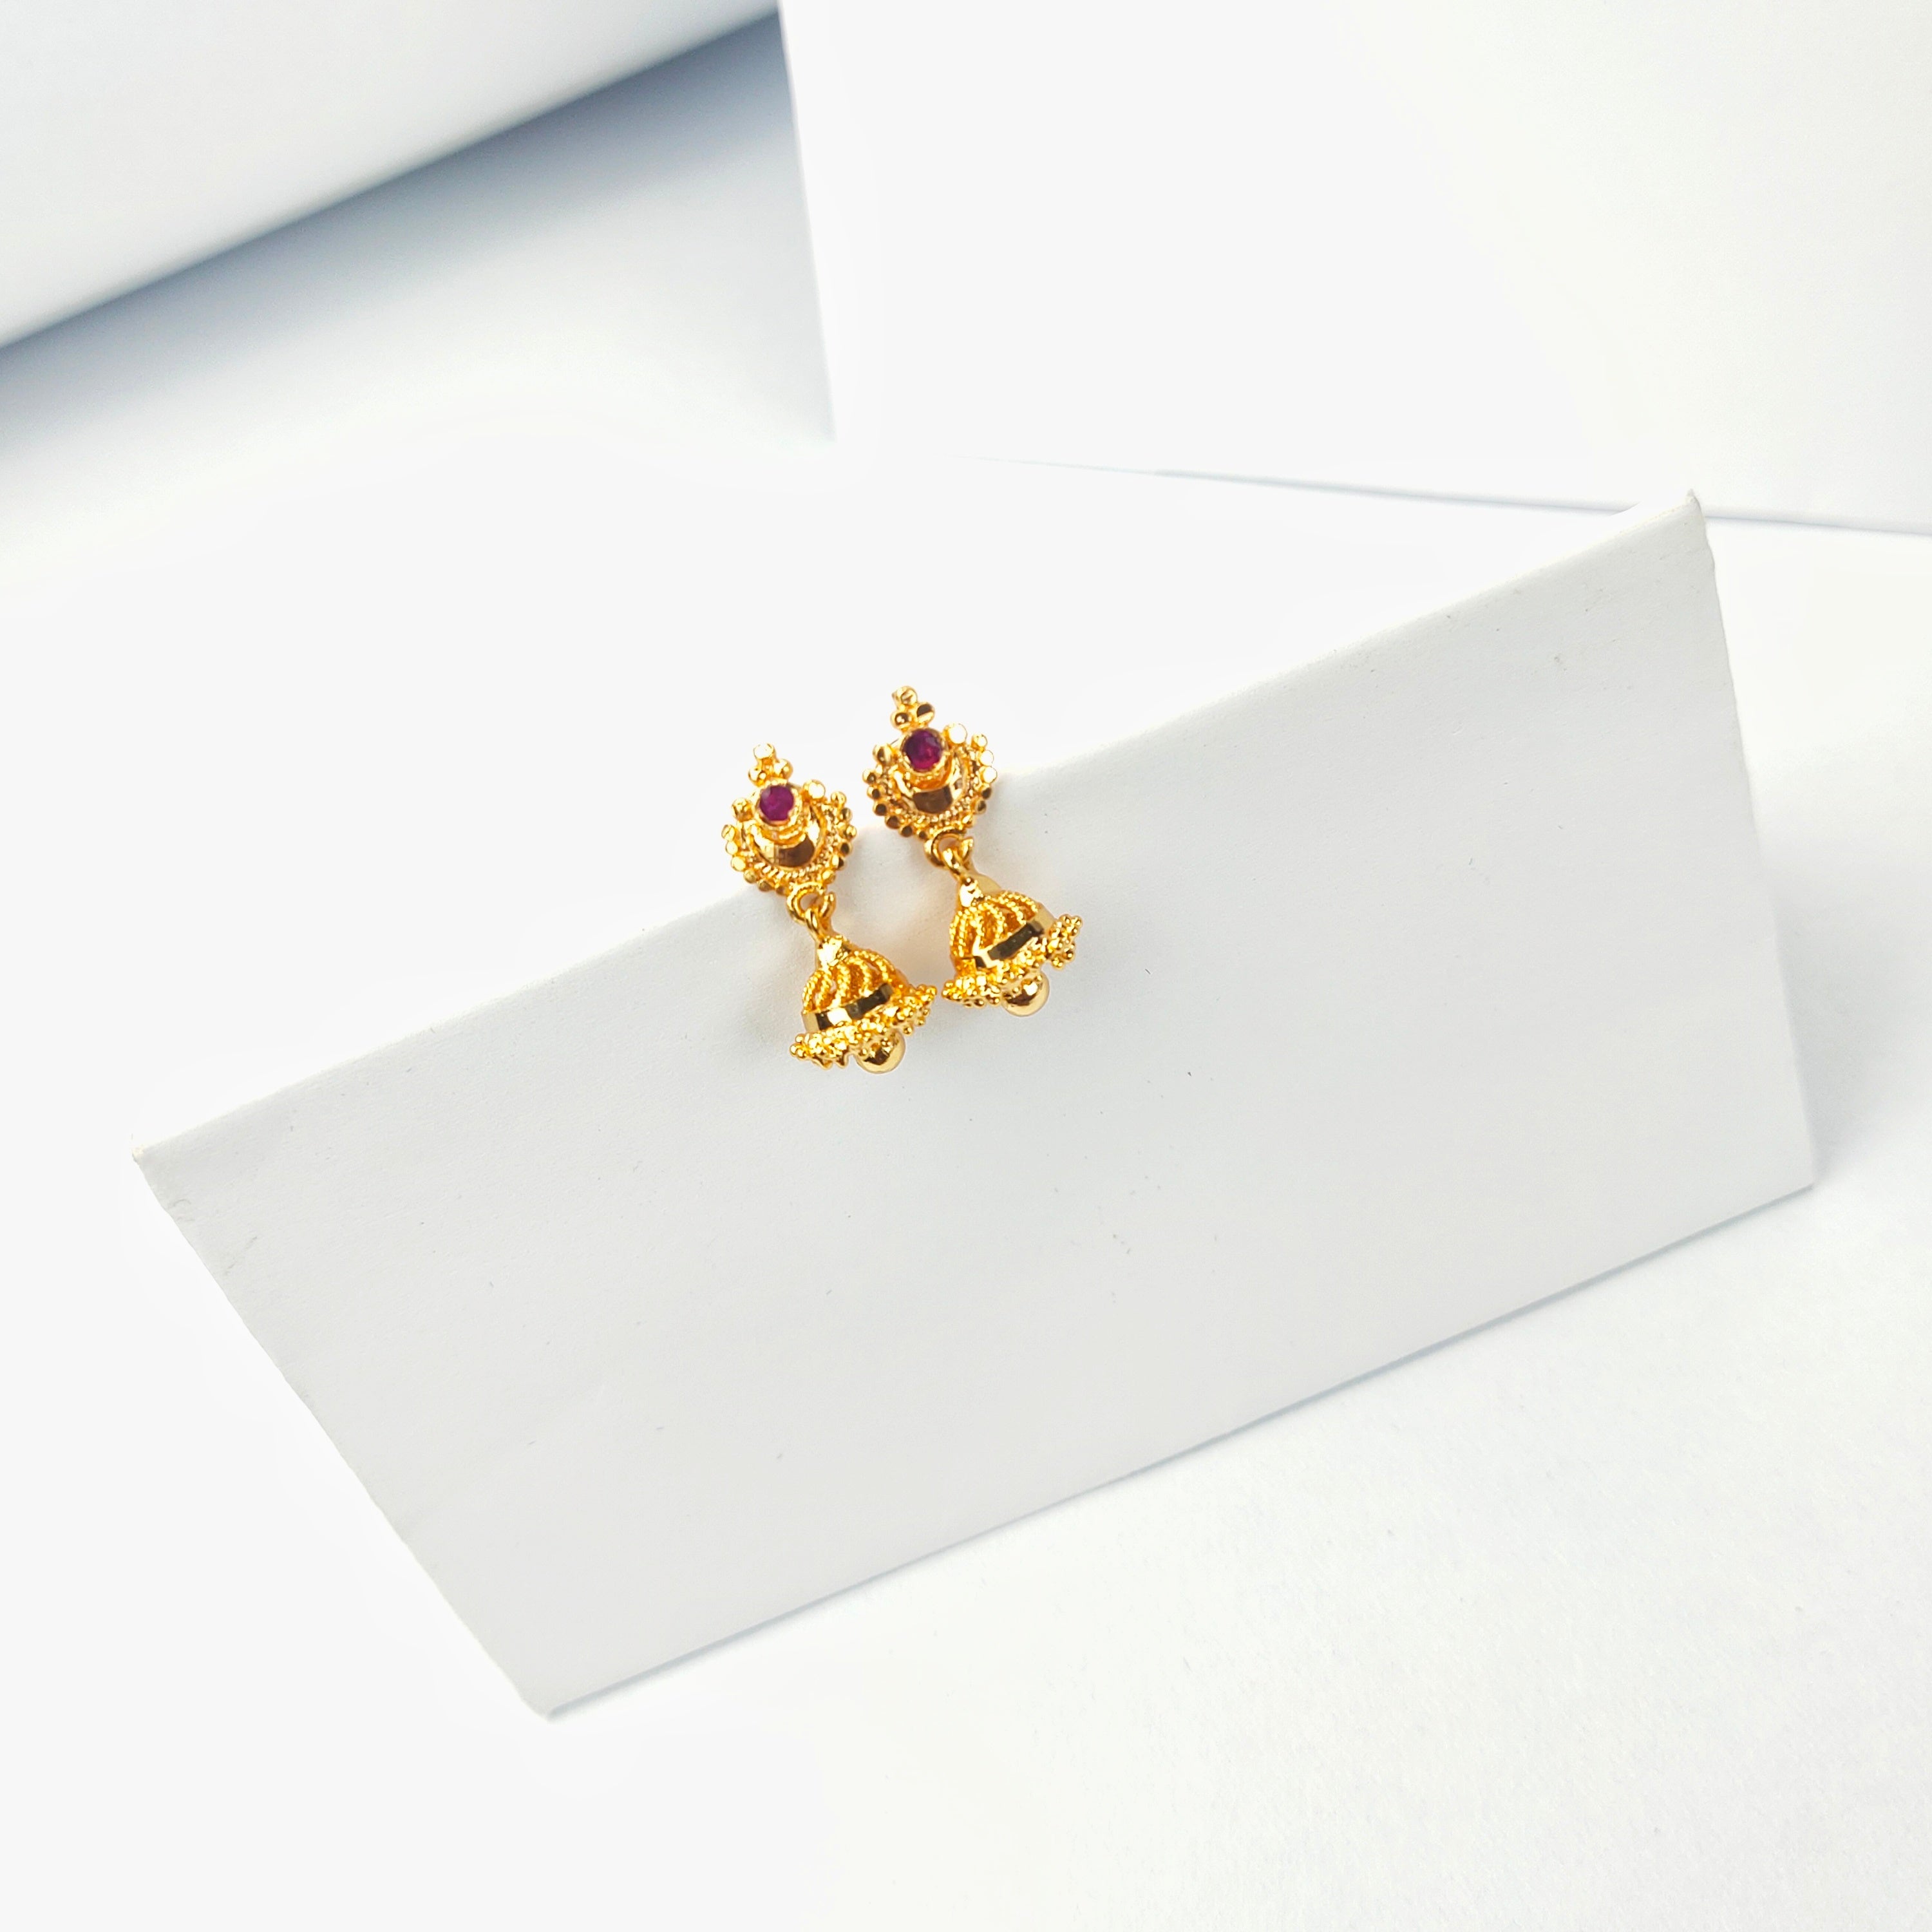 Shop Belle Diamond and Ruby 18K Gold Earring for Women | Gehna